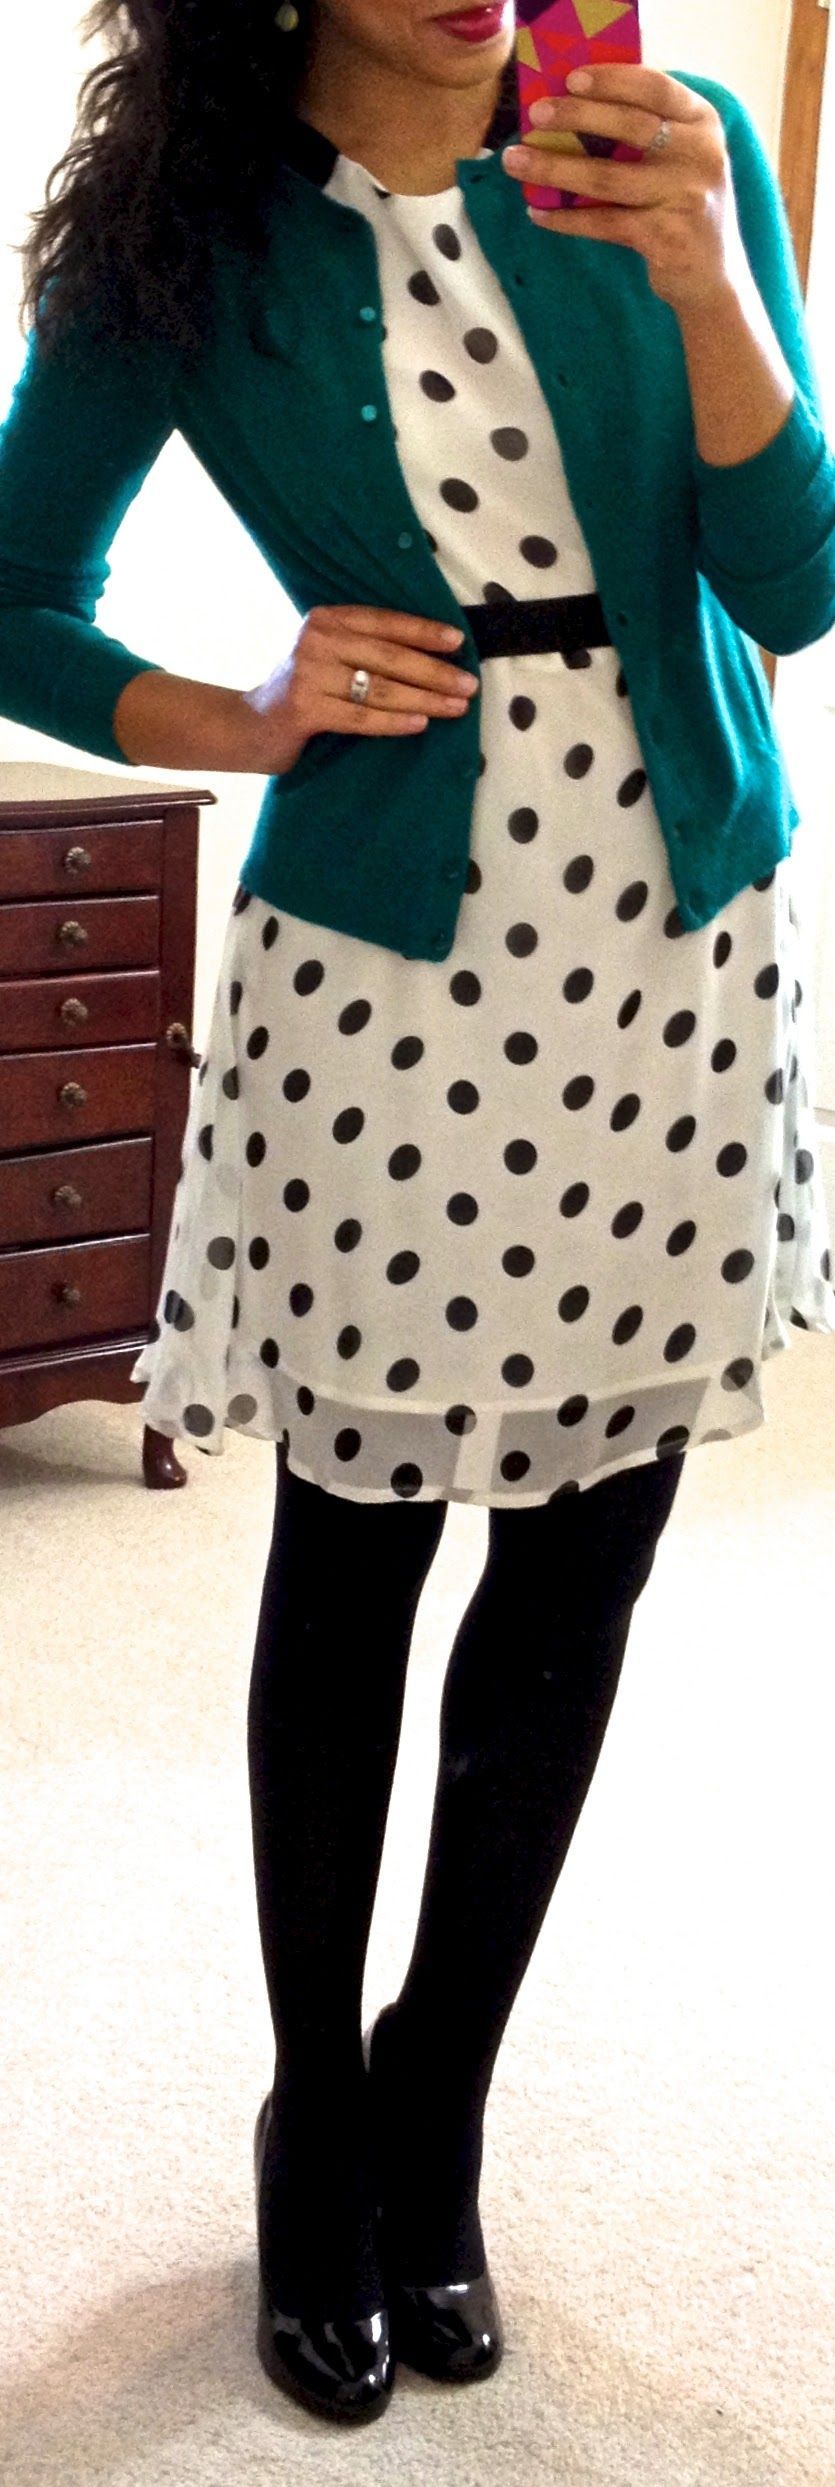 polka dot dress, cardigan, black tights, black shoes.  {teacher fashion outfit Lehrerin Kleidung}